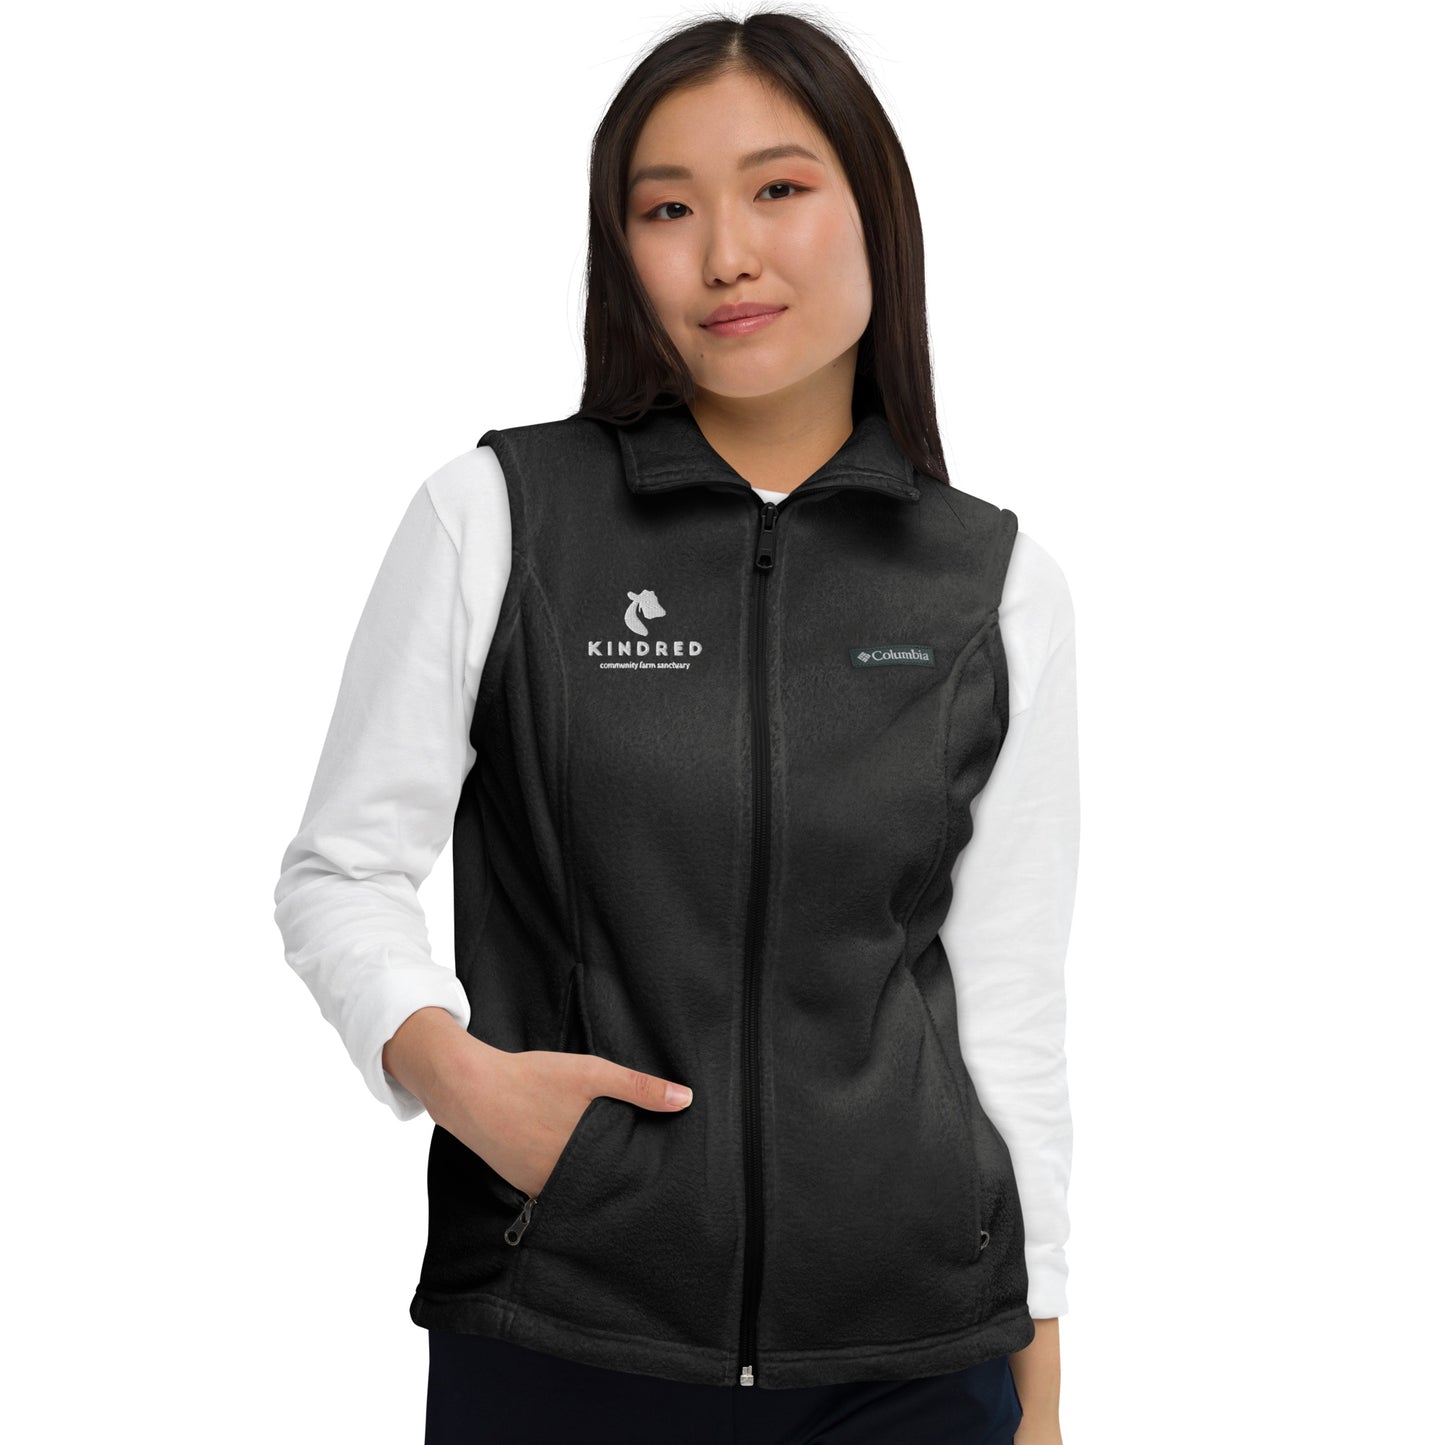 Women’s Columbia fleece vest - Donates $10